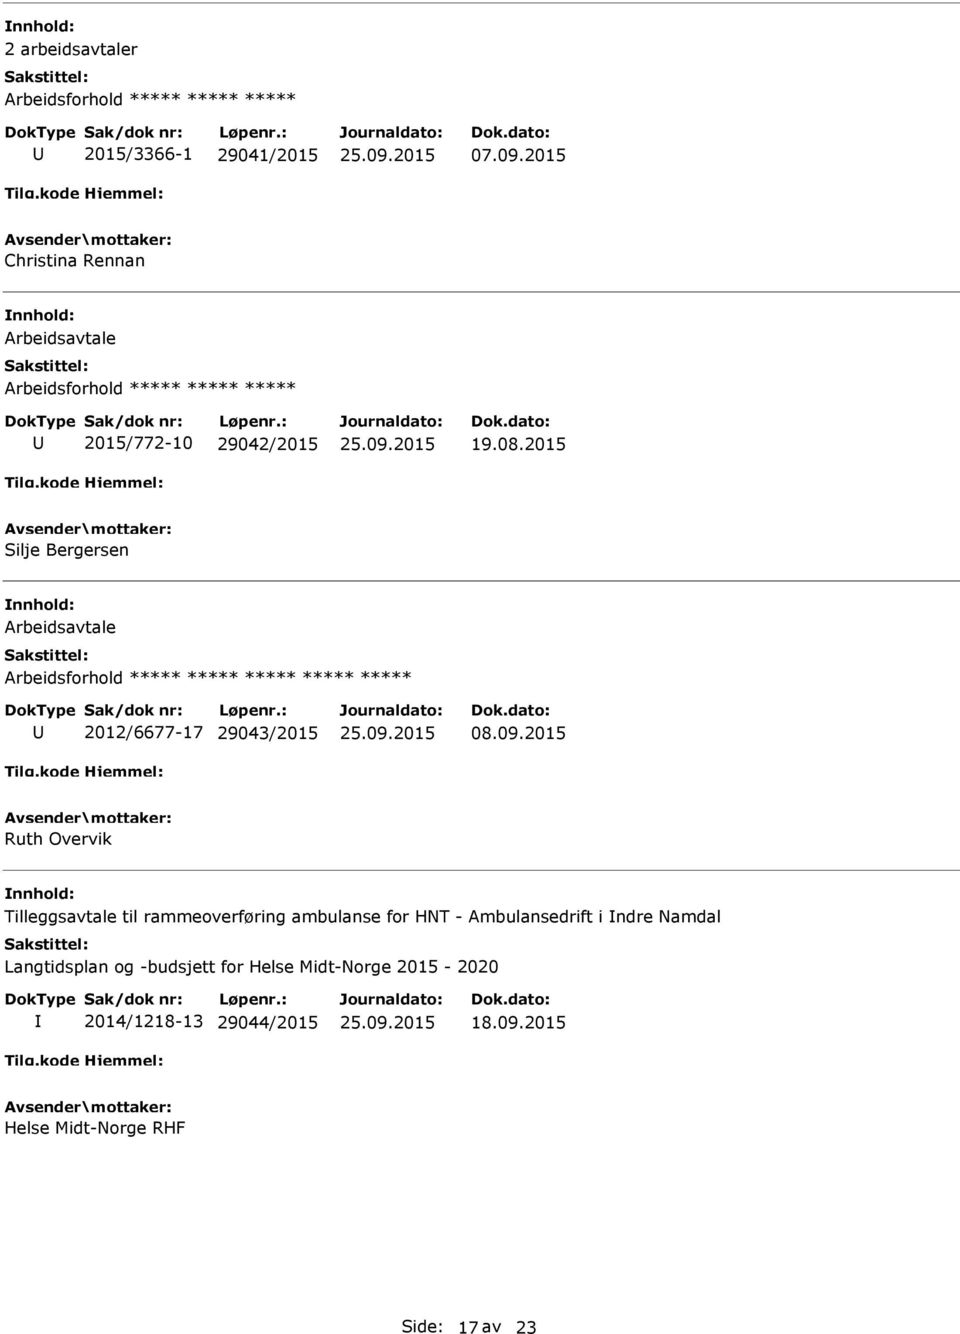 2015 Silje Bergersen Arbeidsavtale 2012/6677-17 29043/2015 08.09.